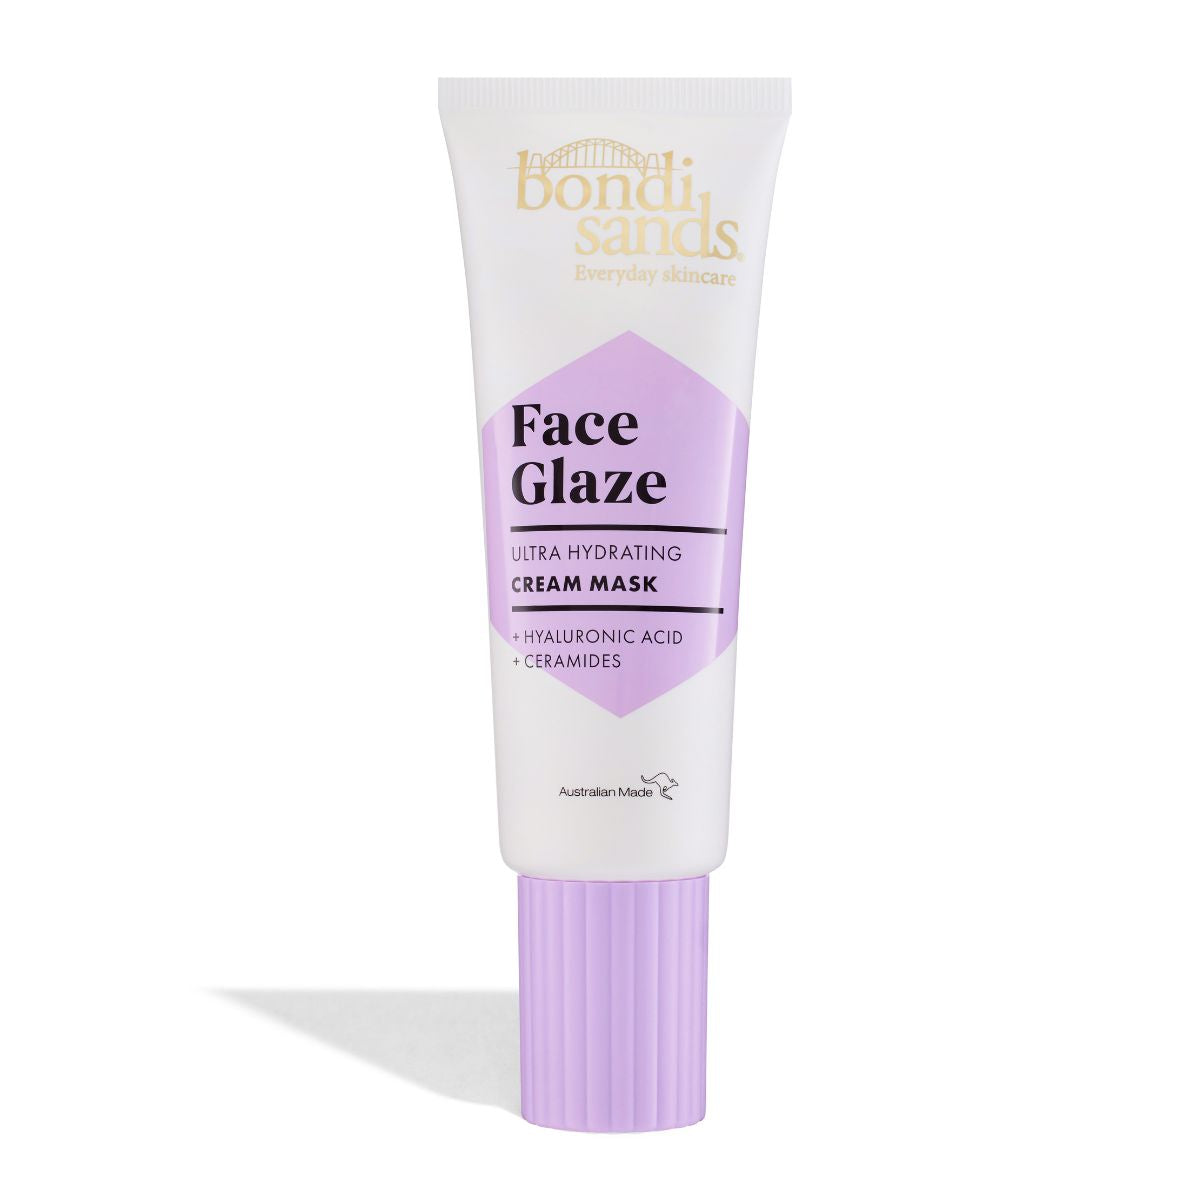 Bondi Sands Face Glaze Cream Mask